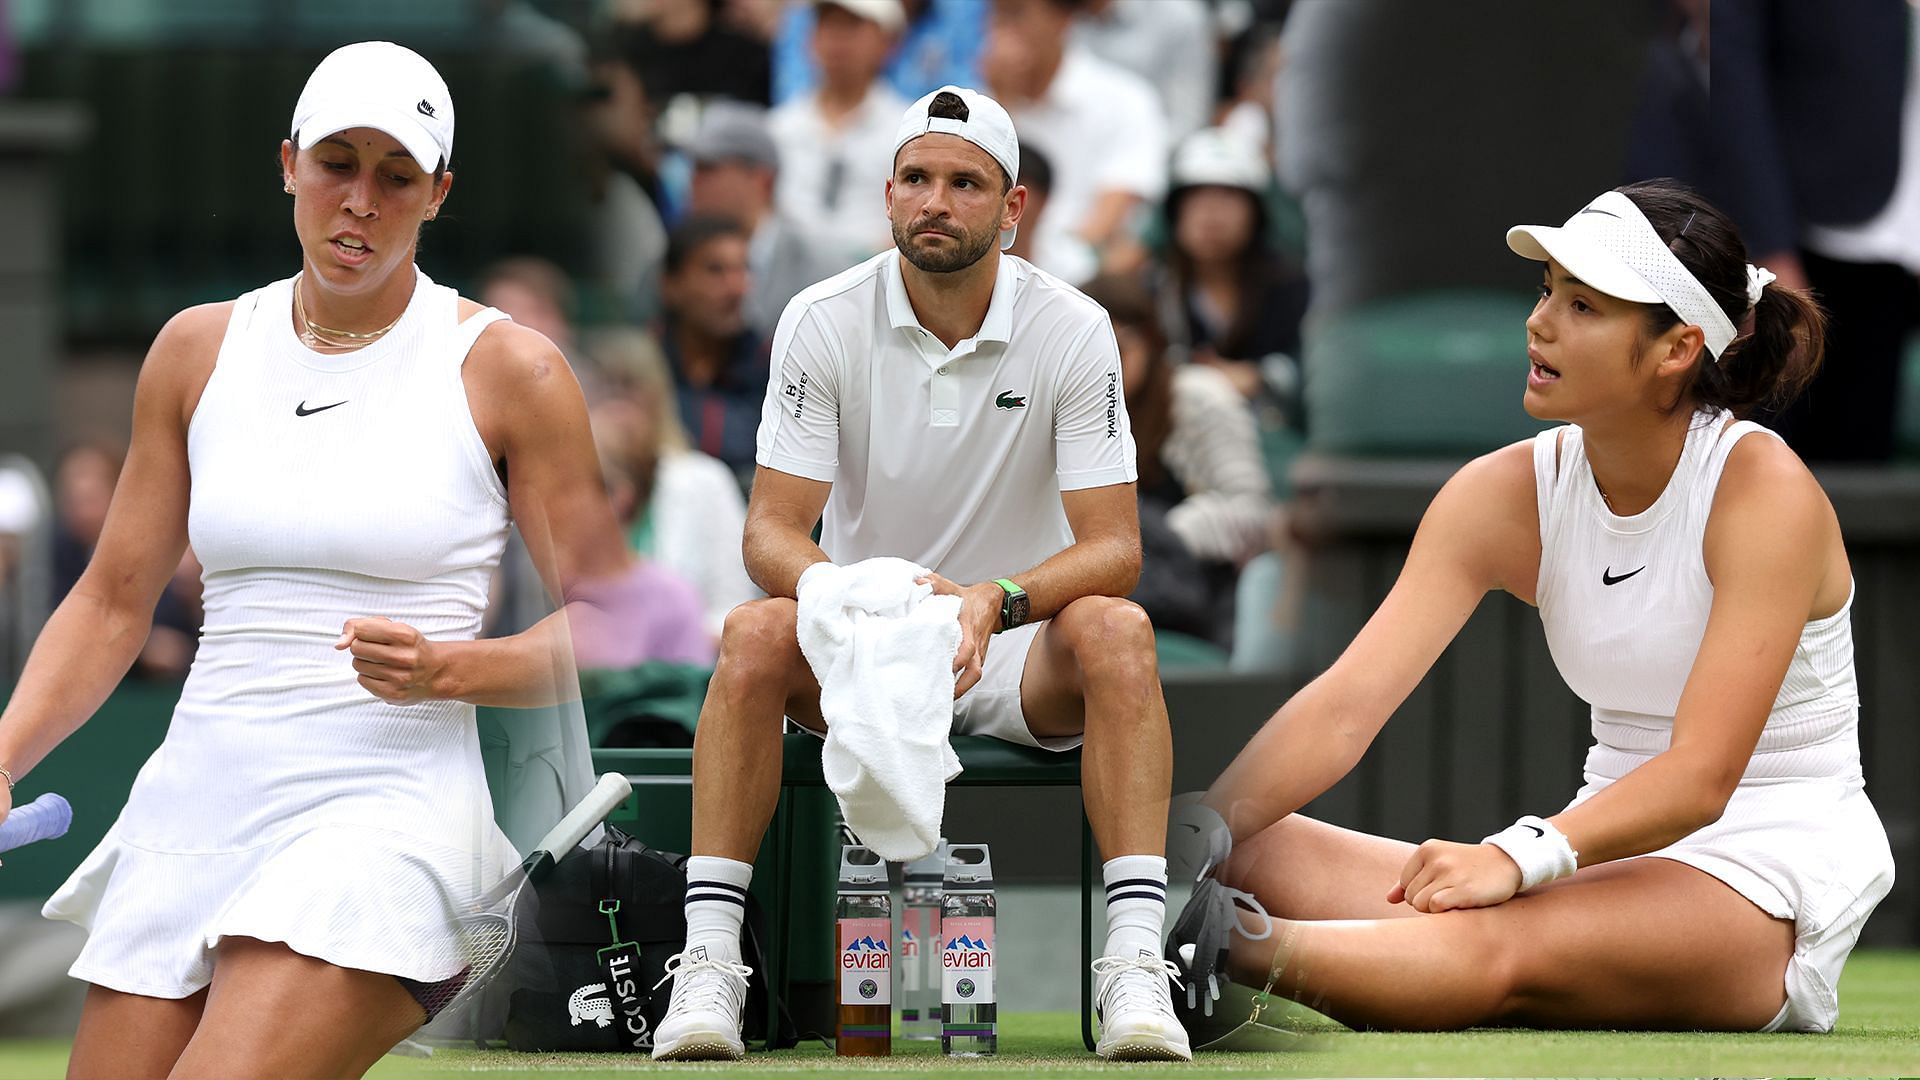 Wimbledon injury crisis: Emma Raducanu, Madison Keys, Grigor Dimitrov among players injured at SW19 amid concerns over playing conditions